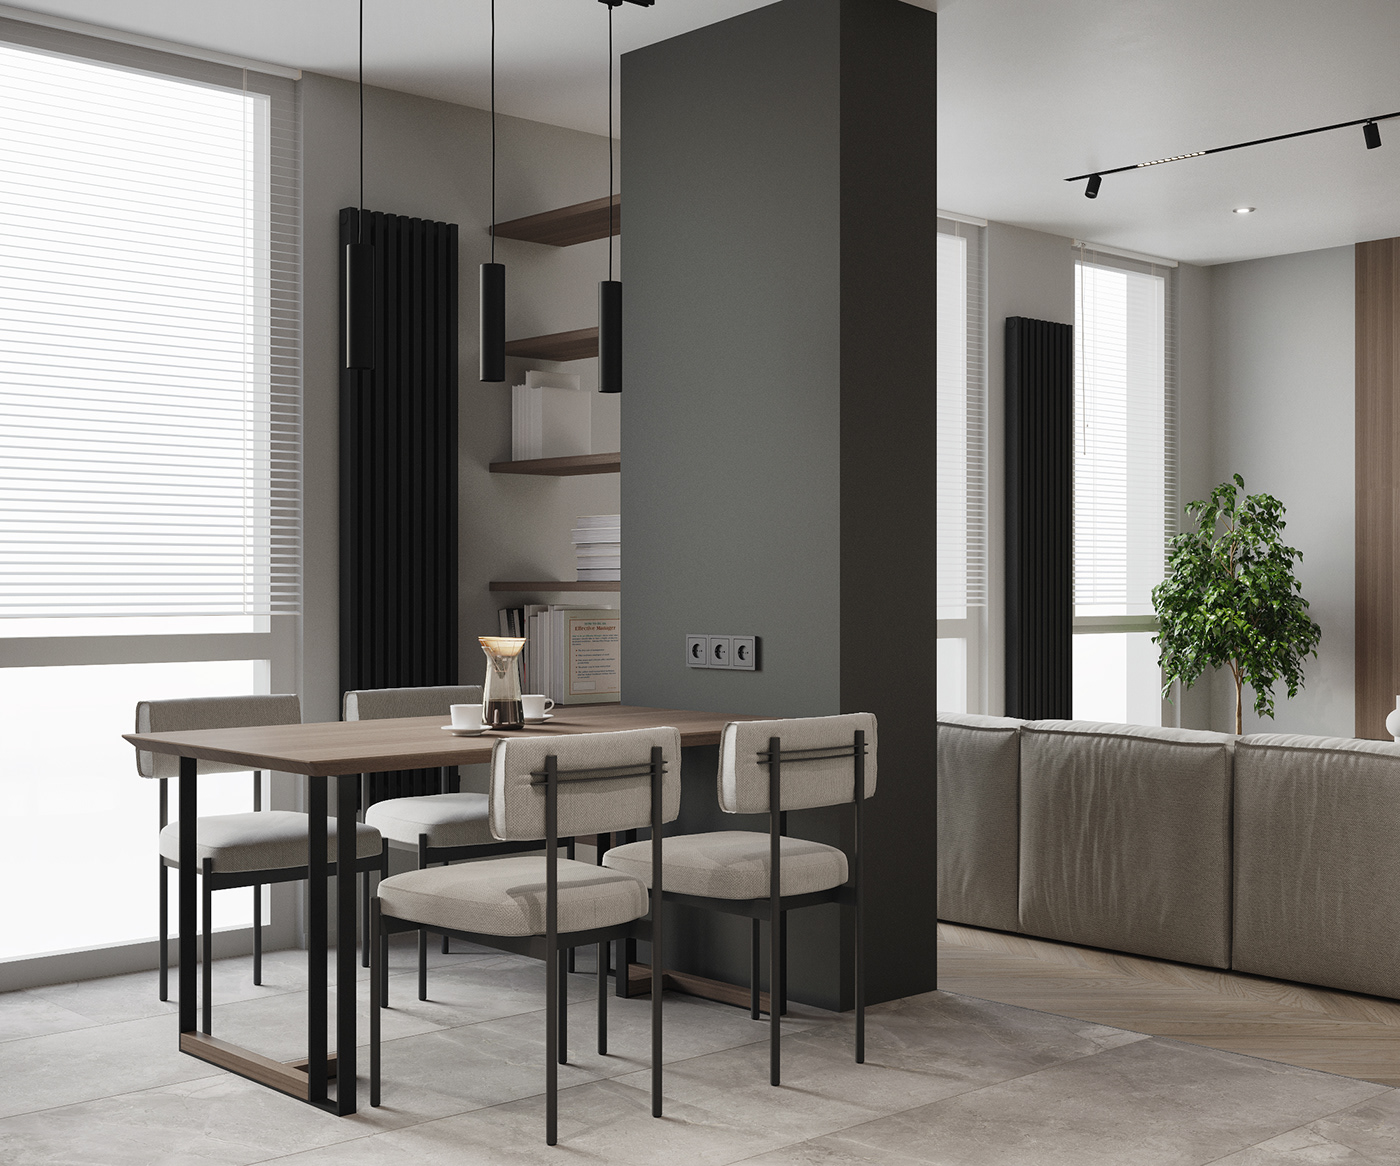 3ds max apartamento architecture corona design Interior kitchen livingroom luxury modernluxury